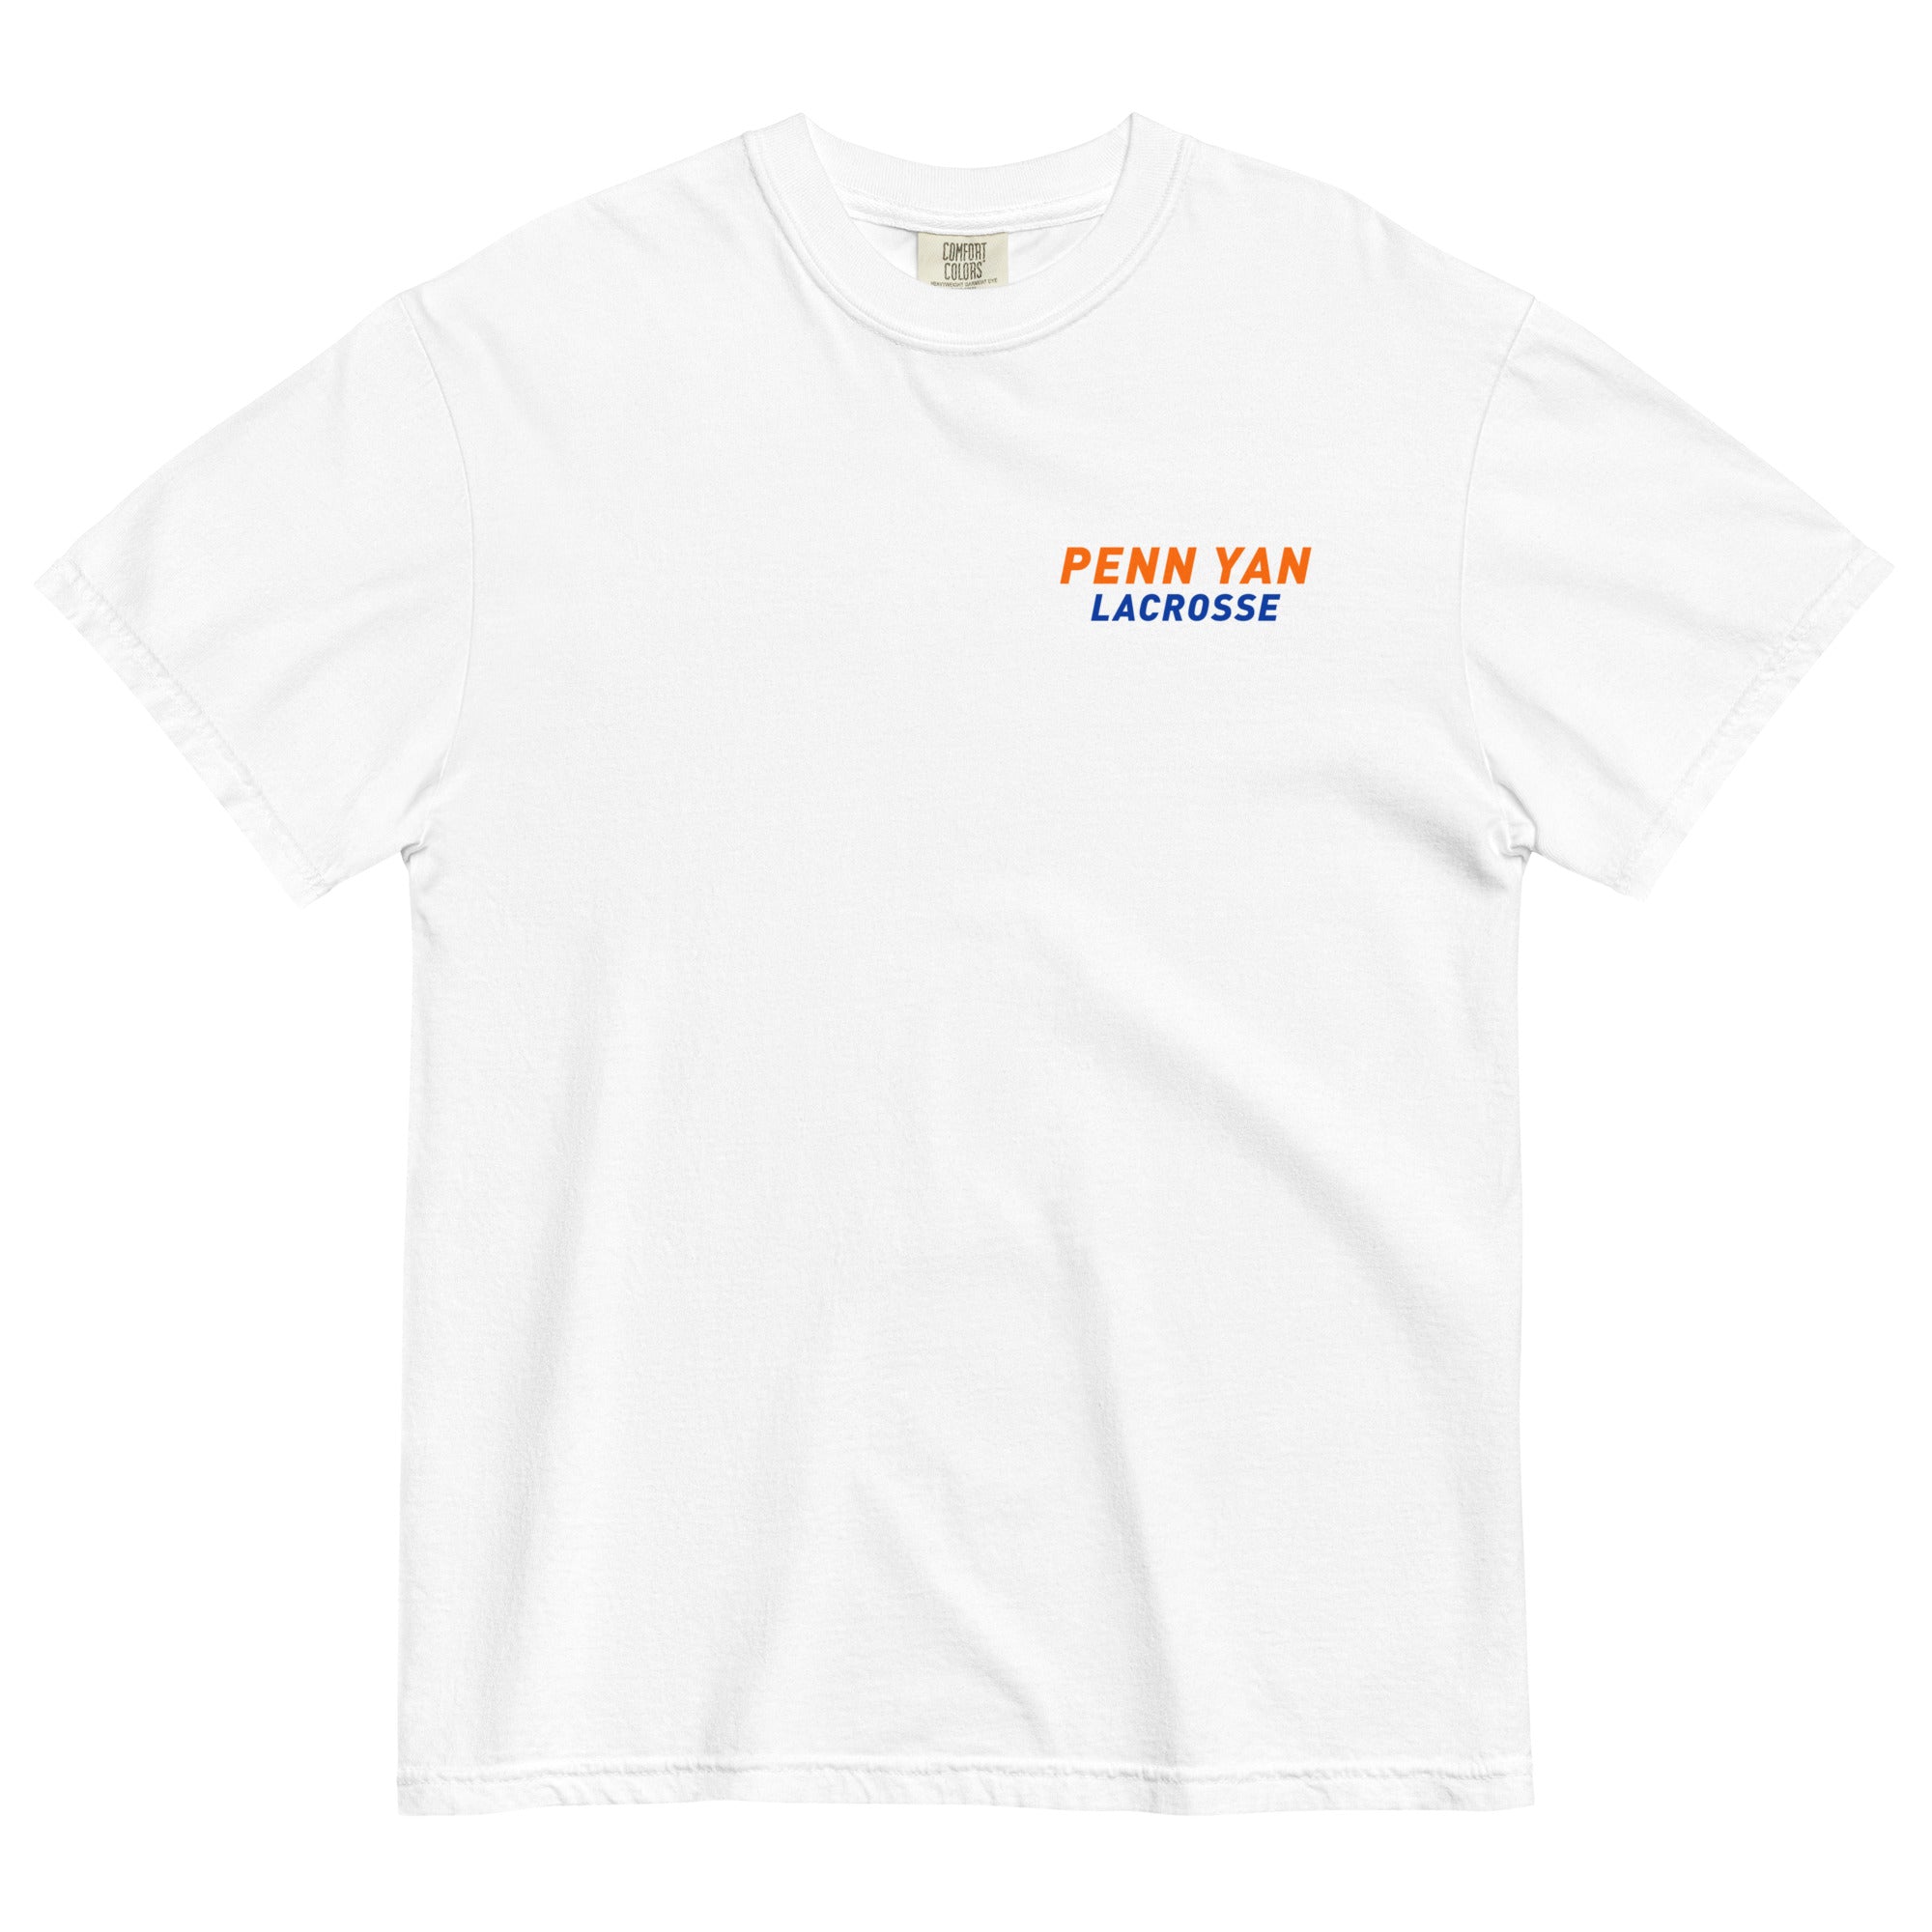 Penn Yan Unisex Heavyweight T-shirt